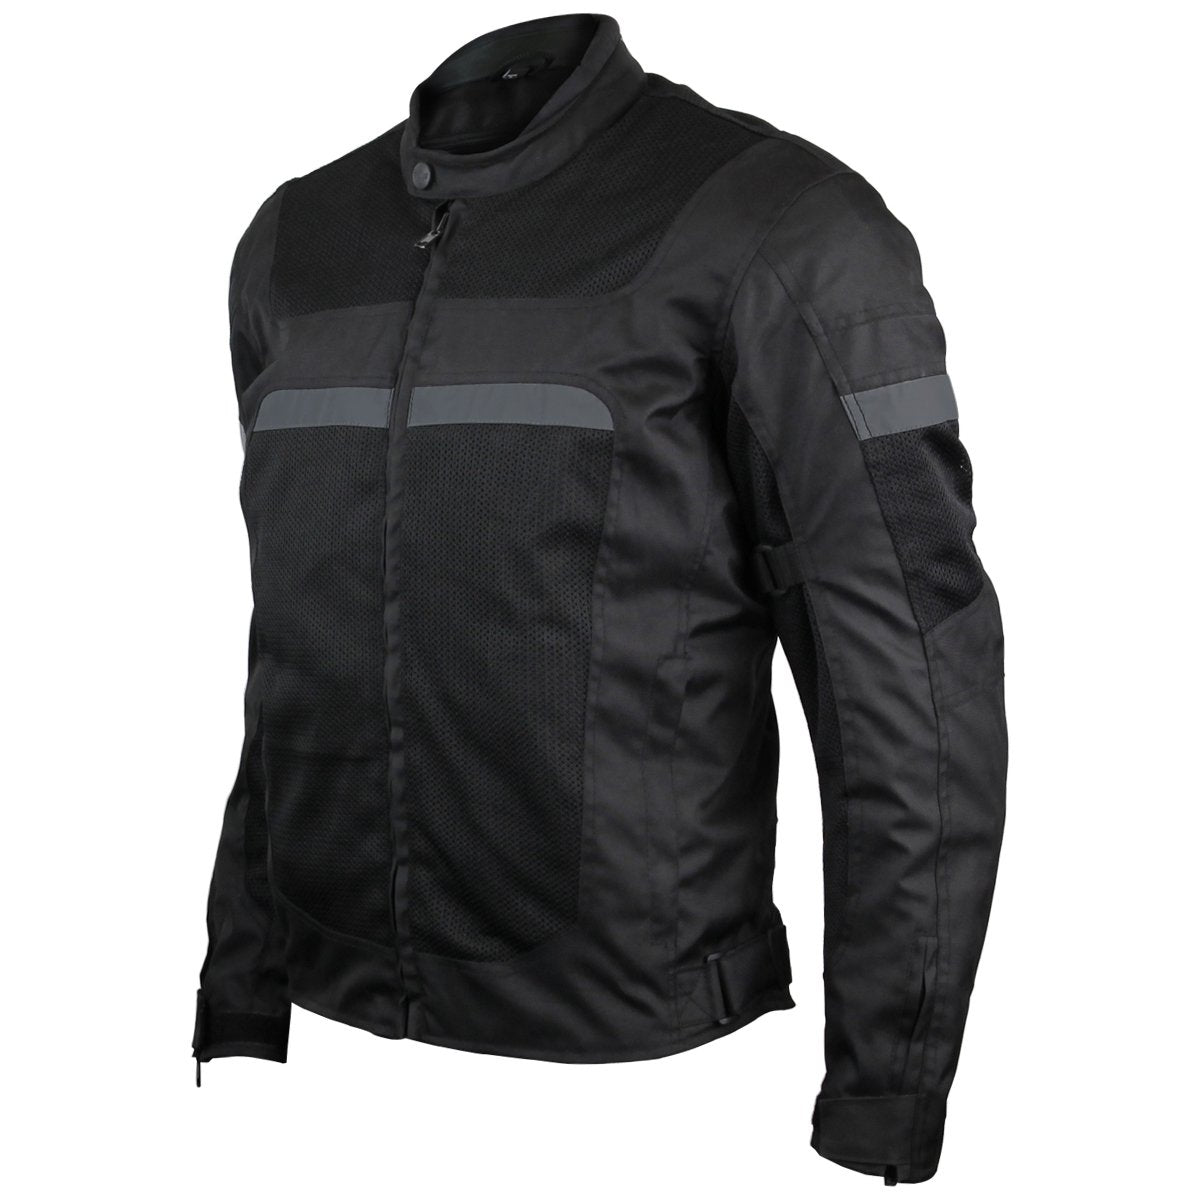 Vance Leather Men's Advanced 3-Season Mesh/Textile CE Armor Motorcycle Jacket